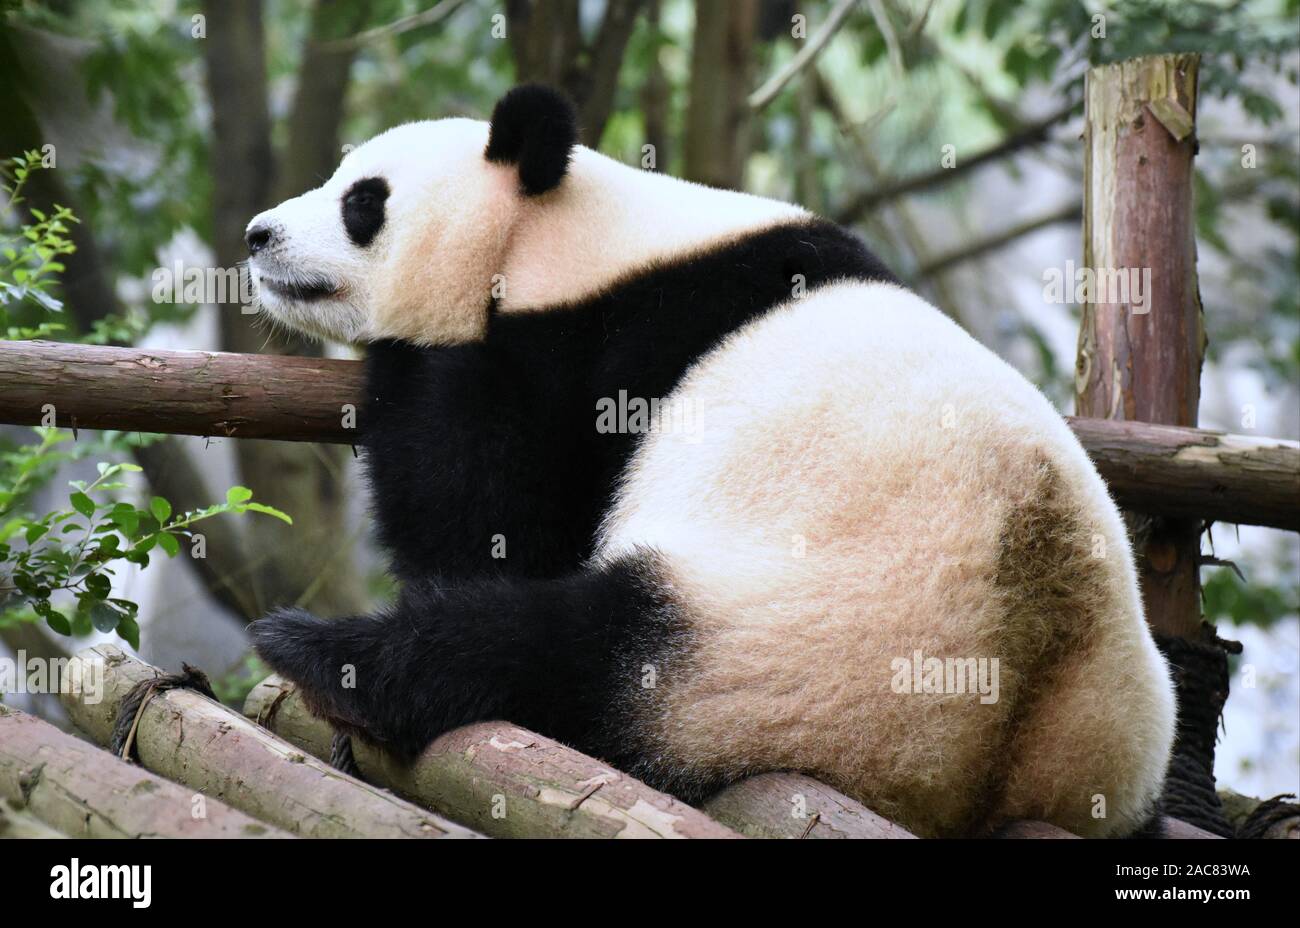 Tired panda bear dozing off Stock Photo